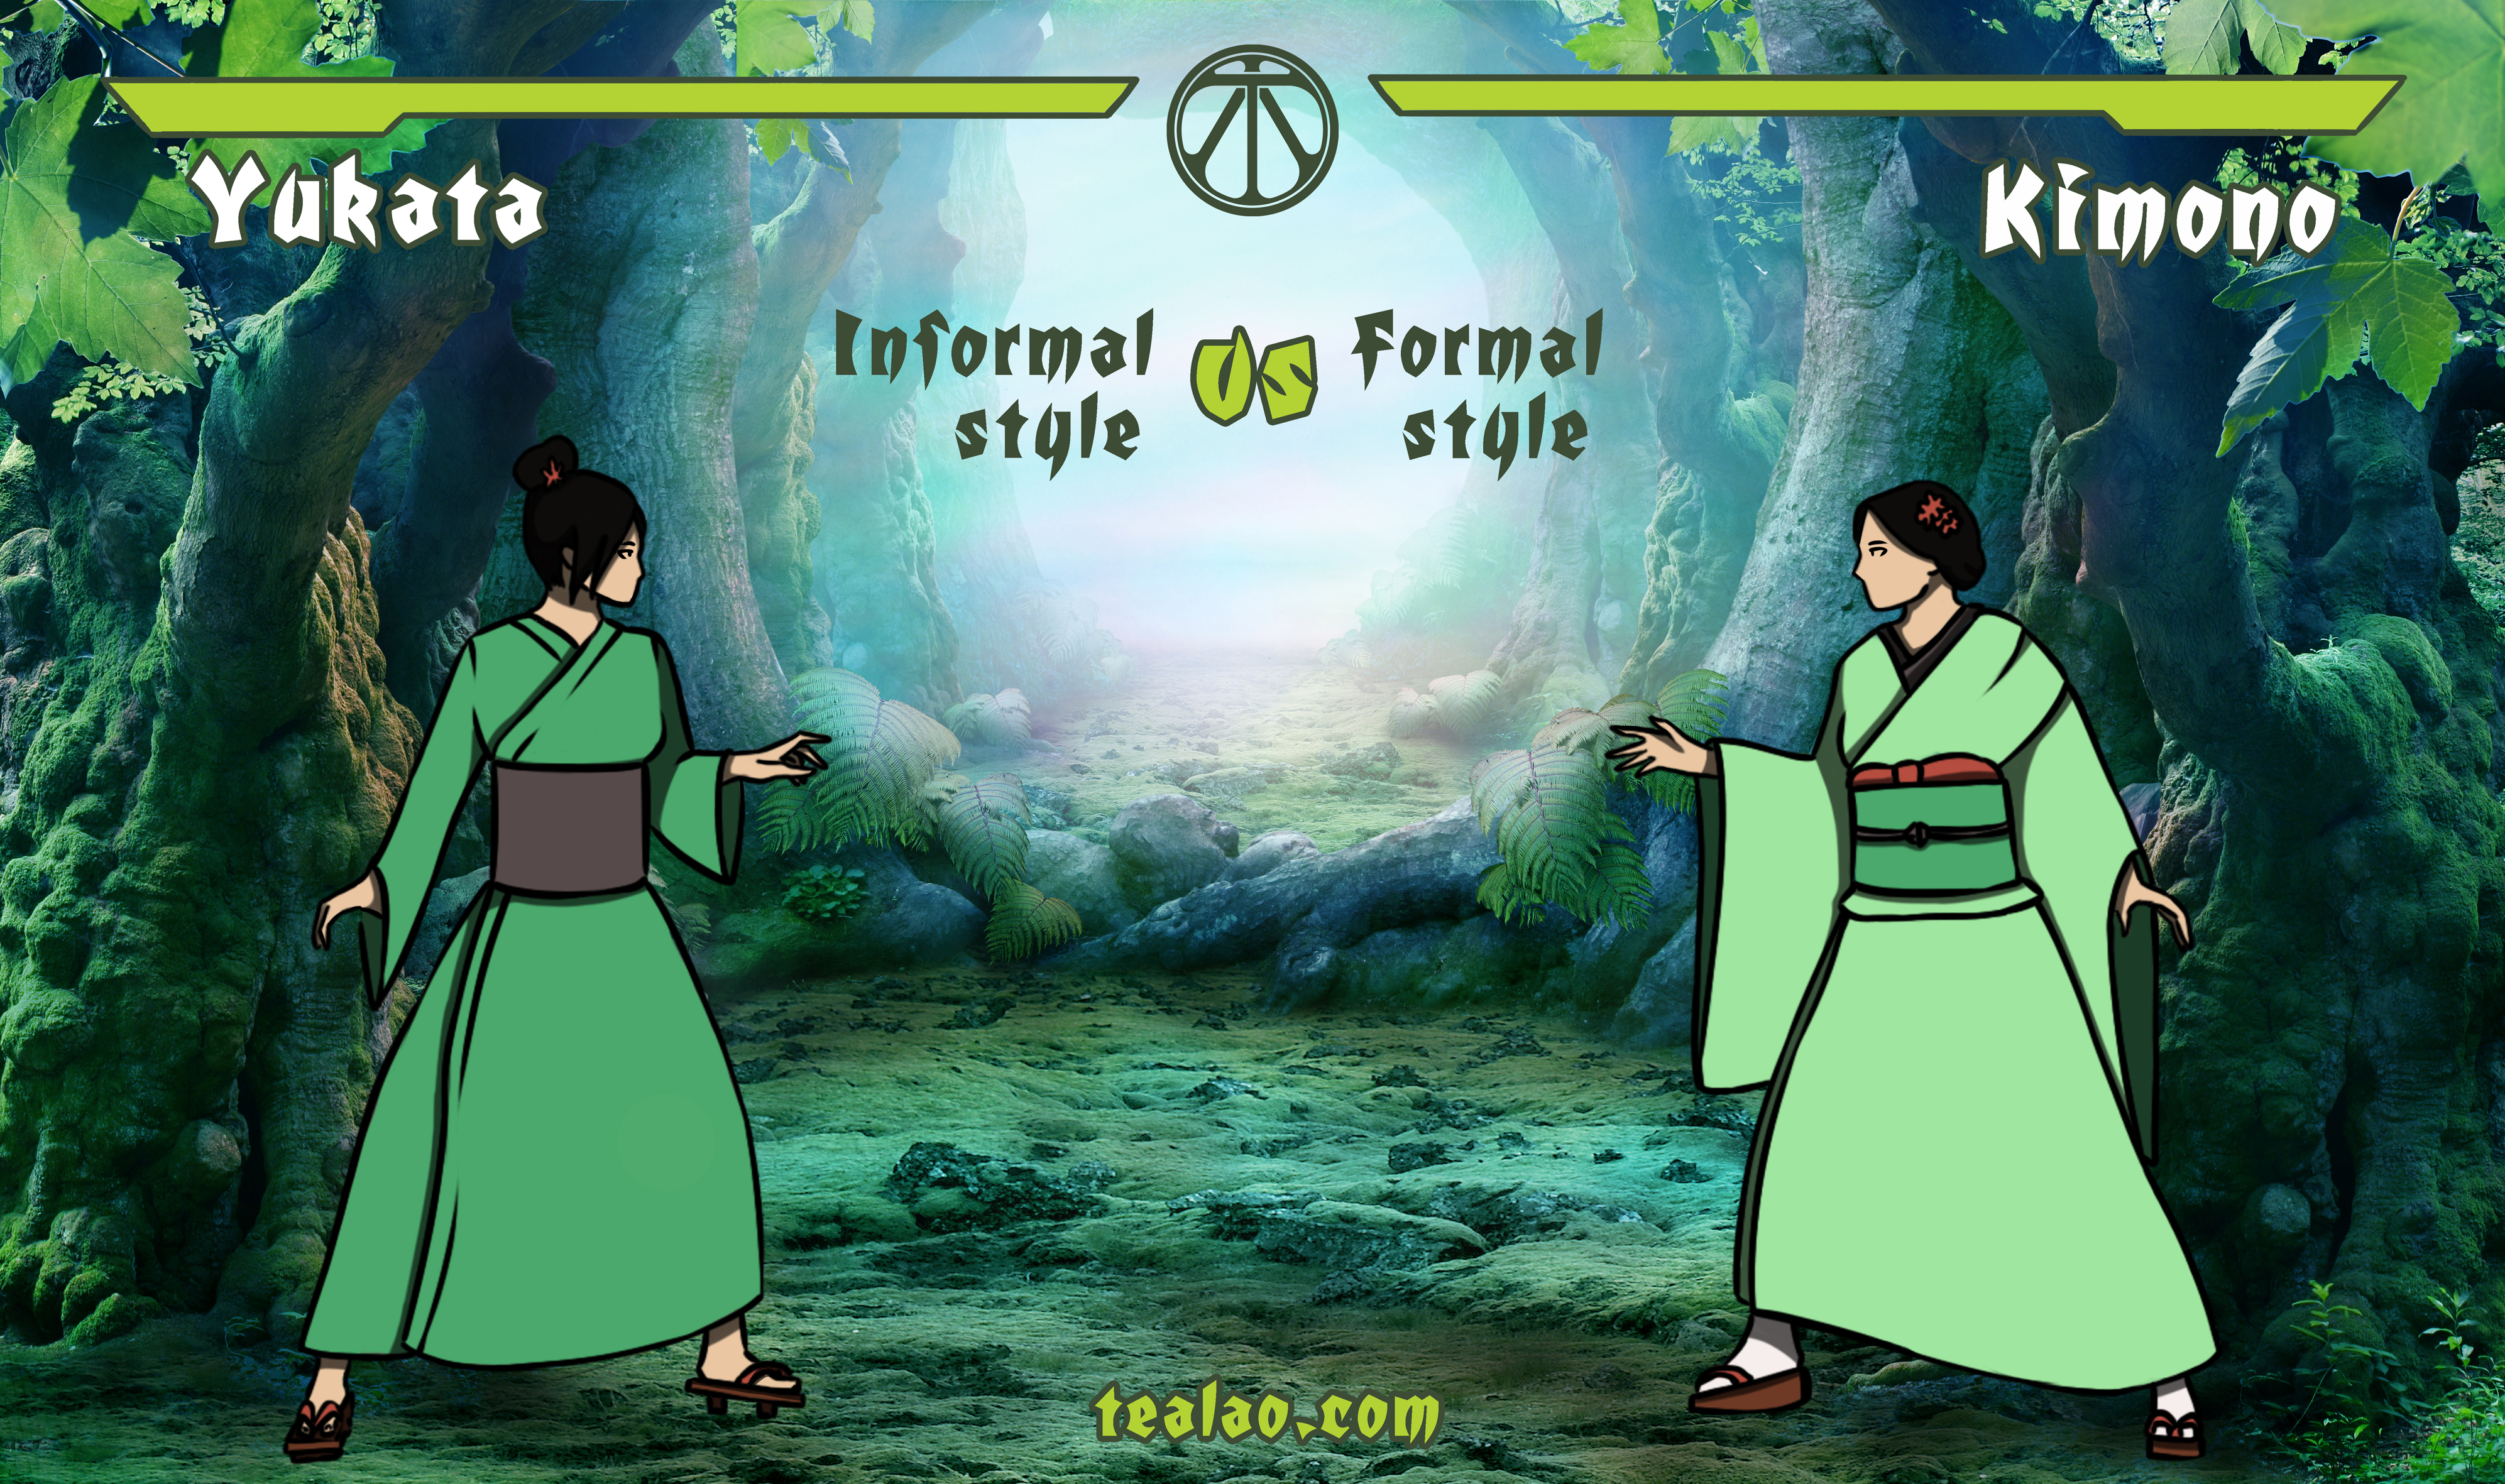 Kimono VS Yukata